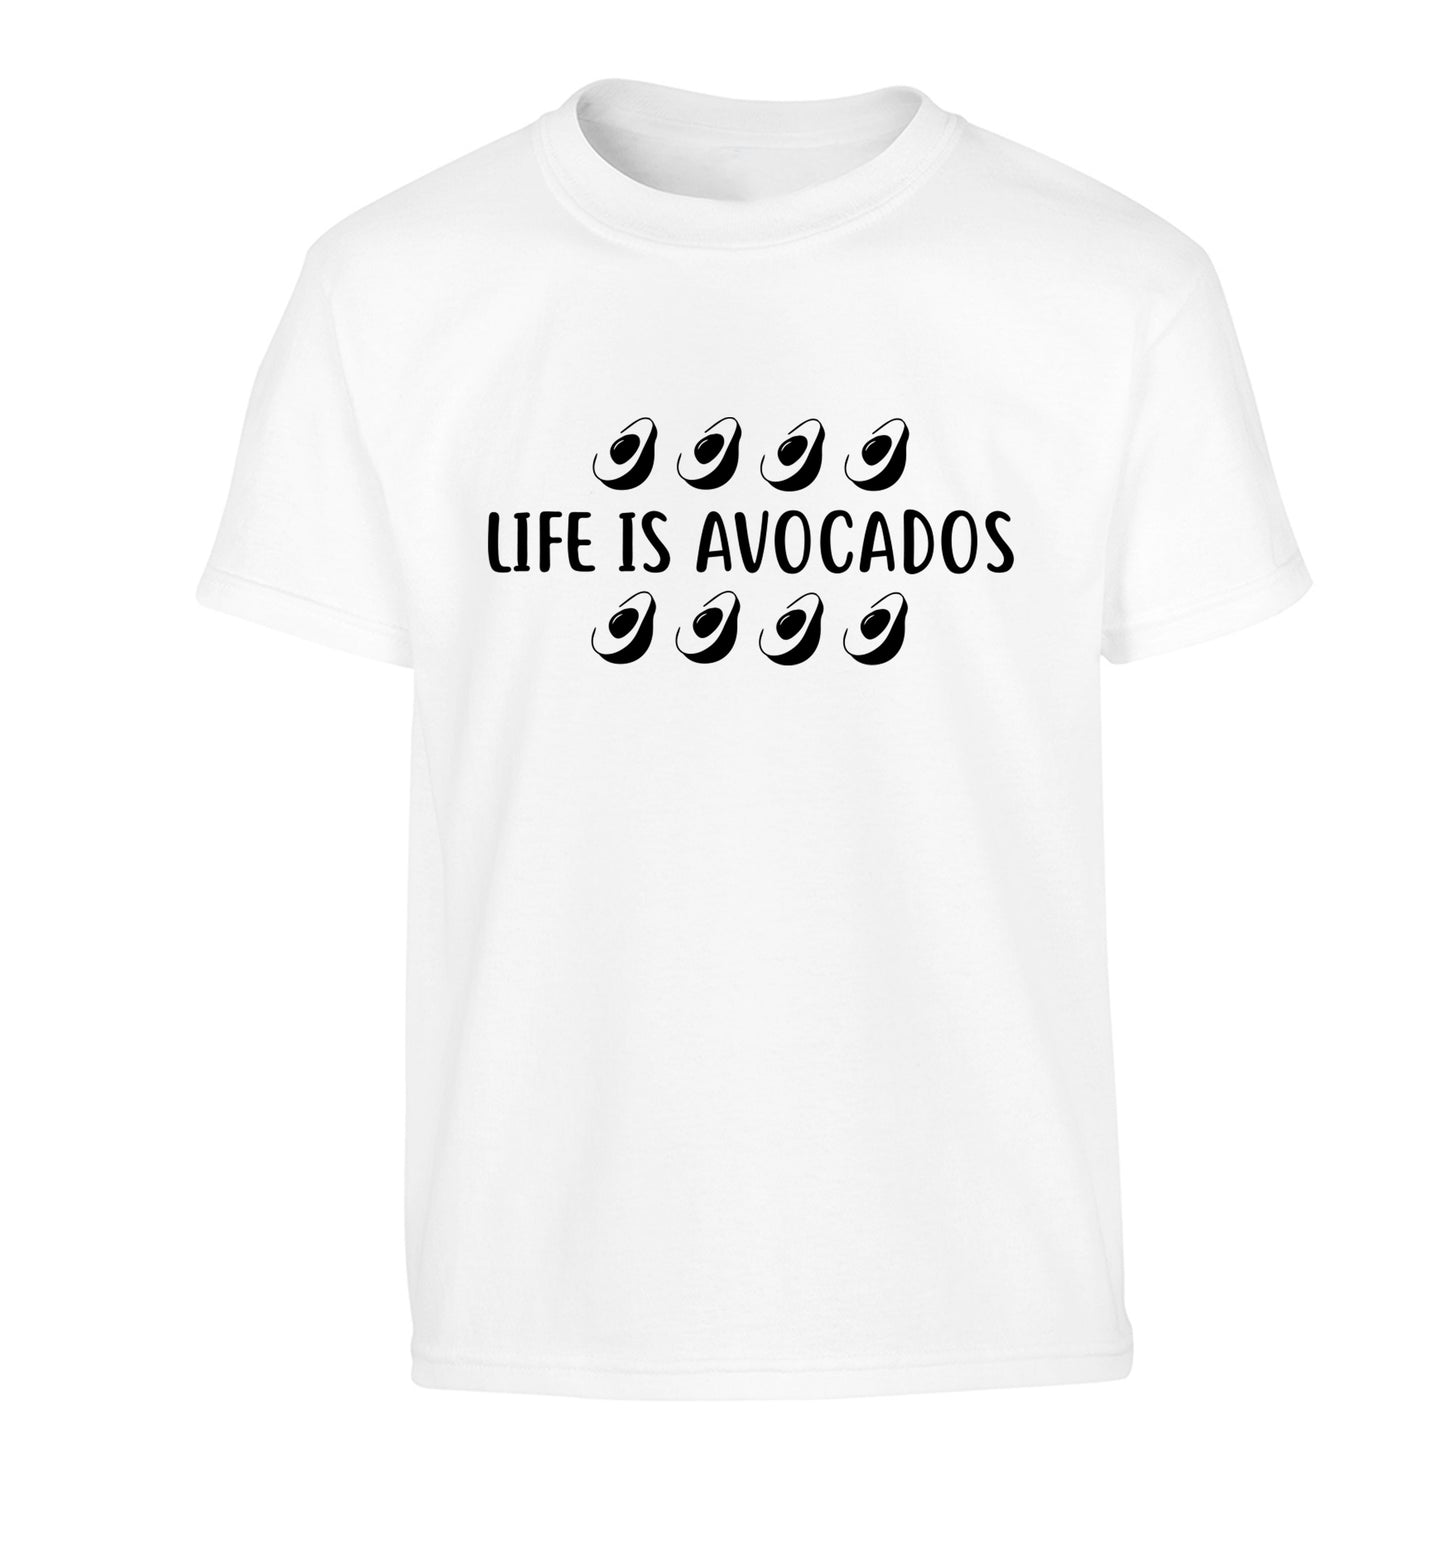 Life is avocados Children's white Tshirt 12-14 Years